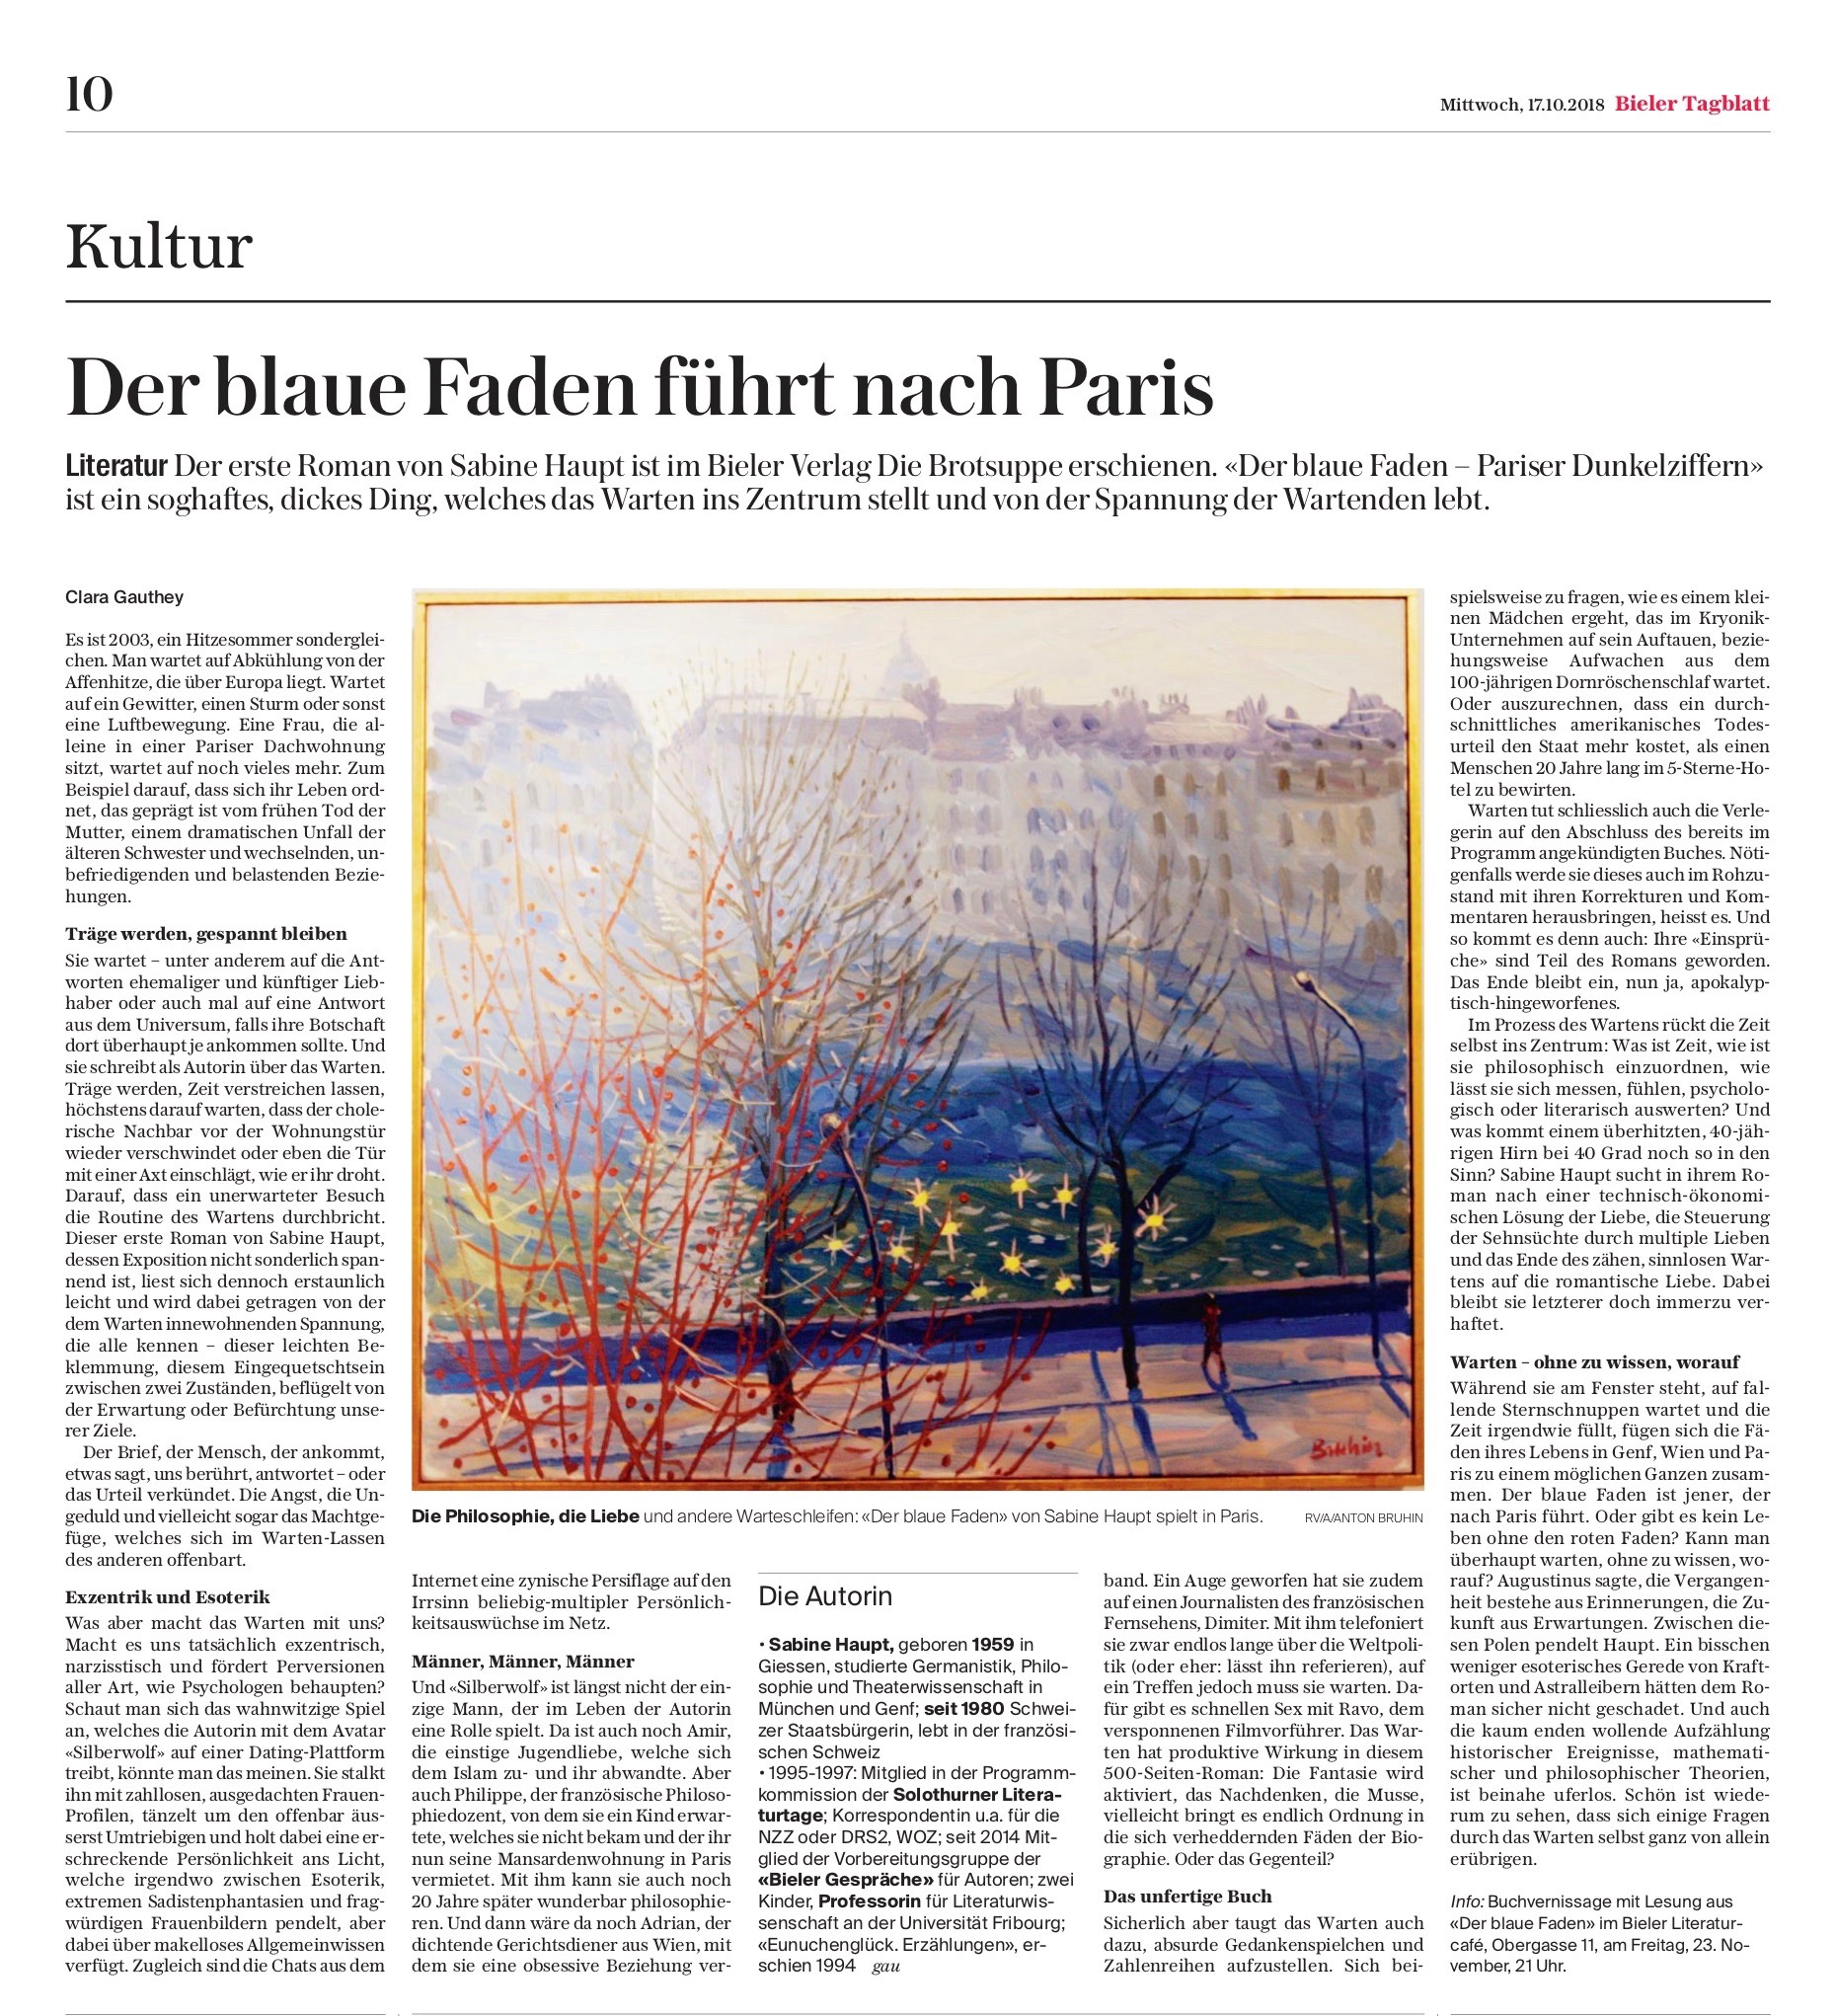 Bieler Tagblatt, 17.10.2018
Rezension zu "Der blaue Faden"